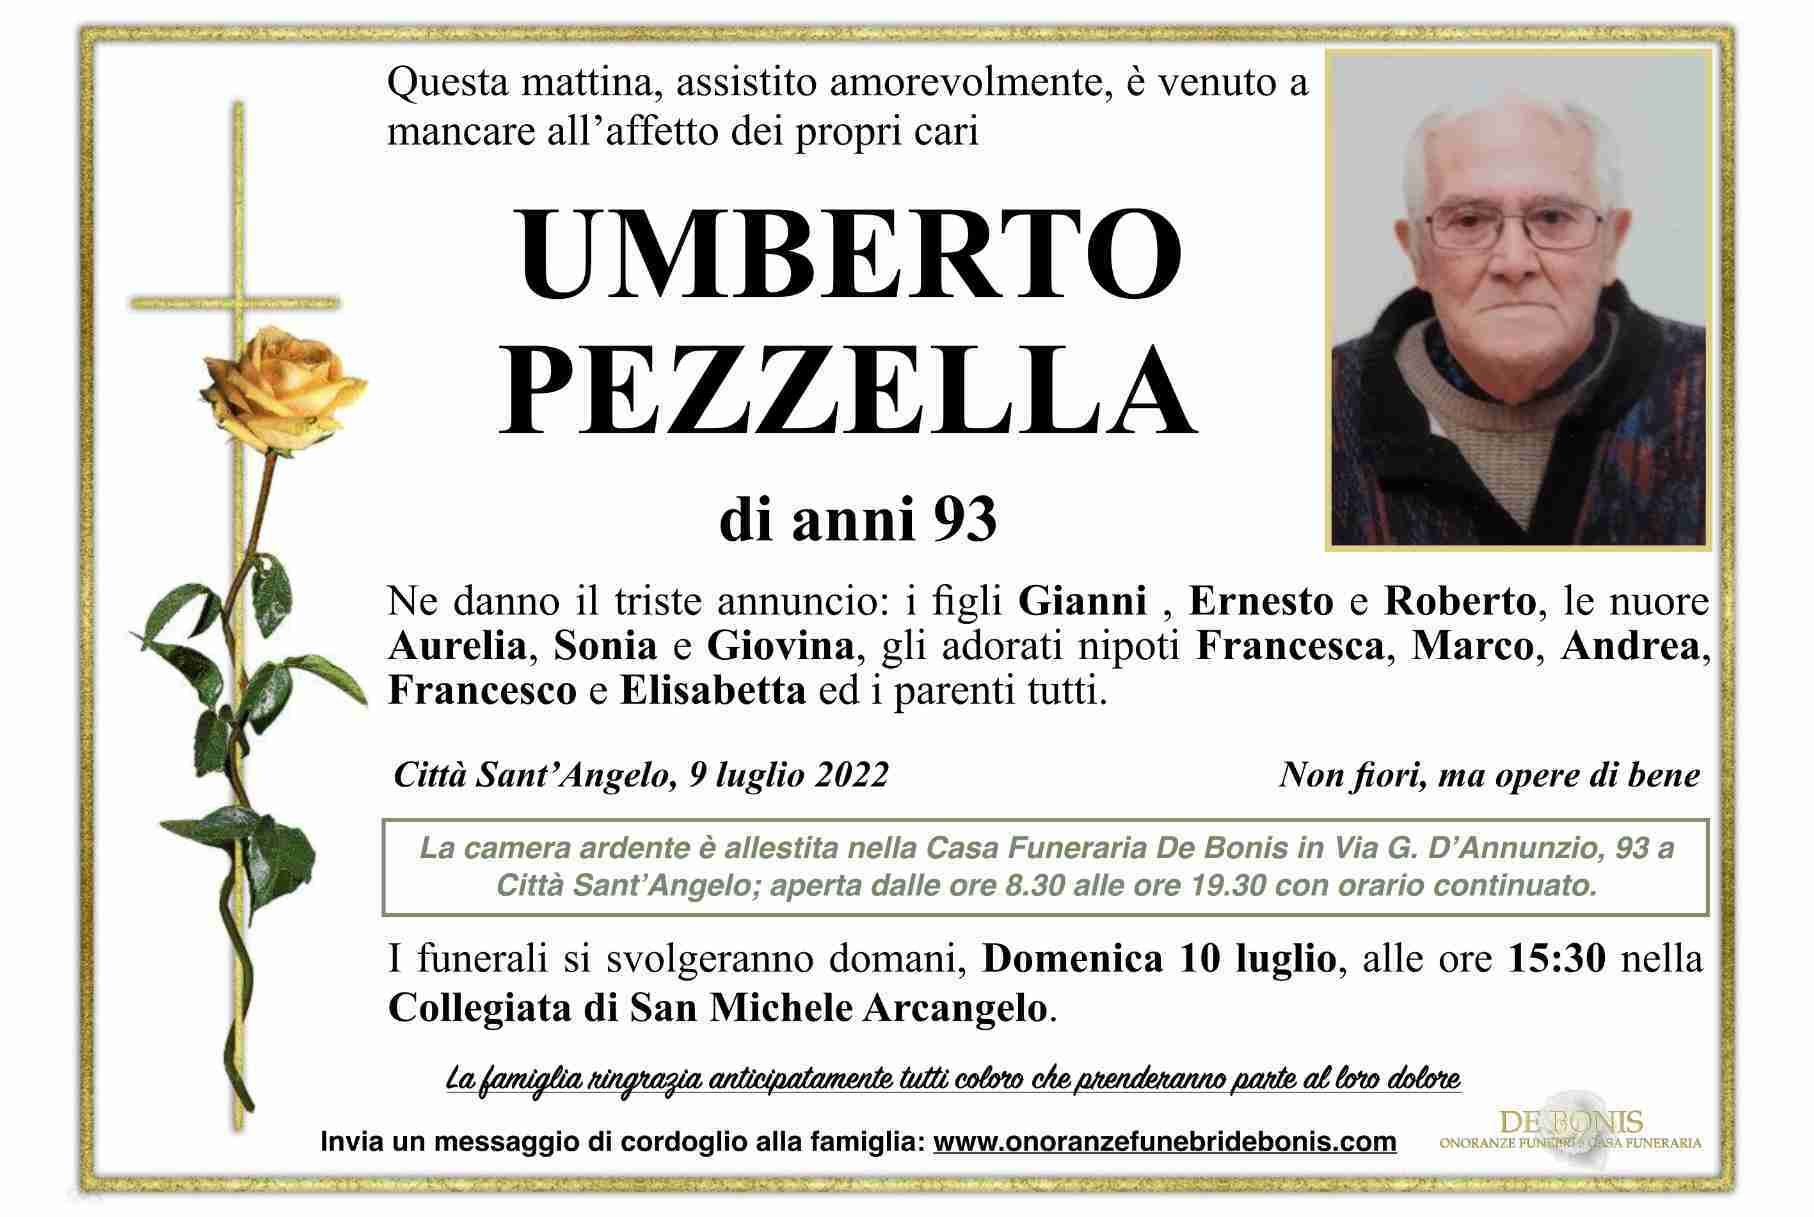 Umberto Pezzella